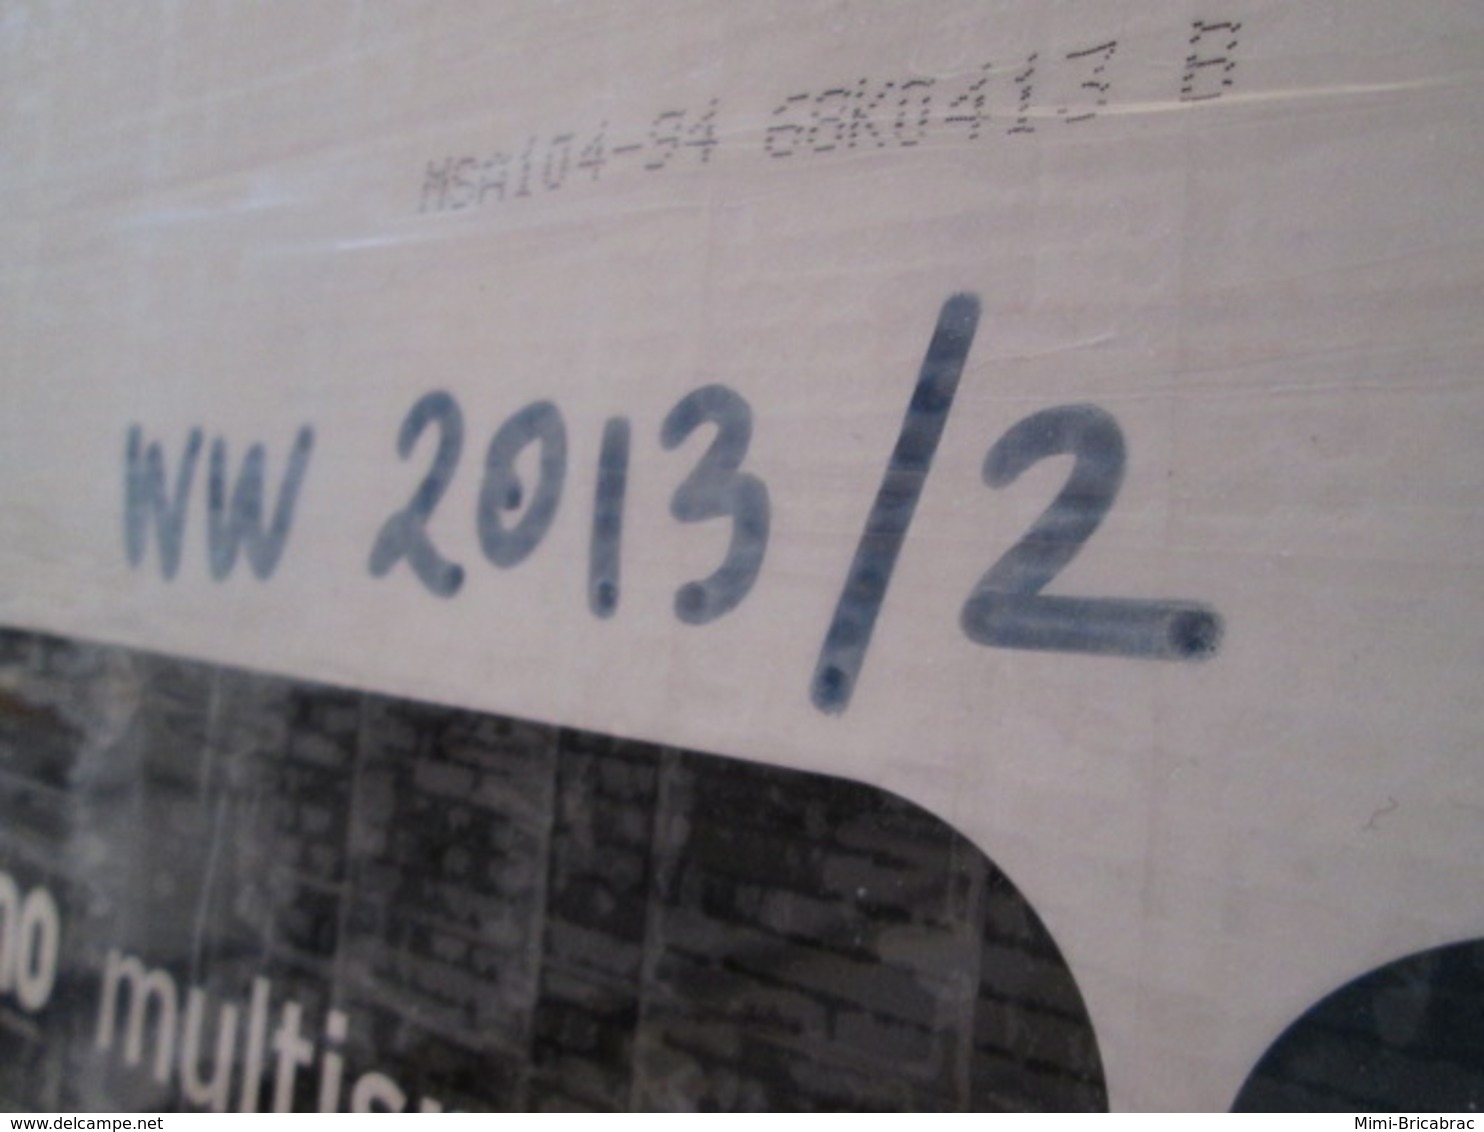 WW2013-2 Revue maquettiste plastique / TAMIYA MODEL MAGAZINE n°72 de 2004 valait 5,40€ , sommaire en photo 2 ou 3